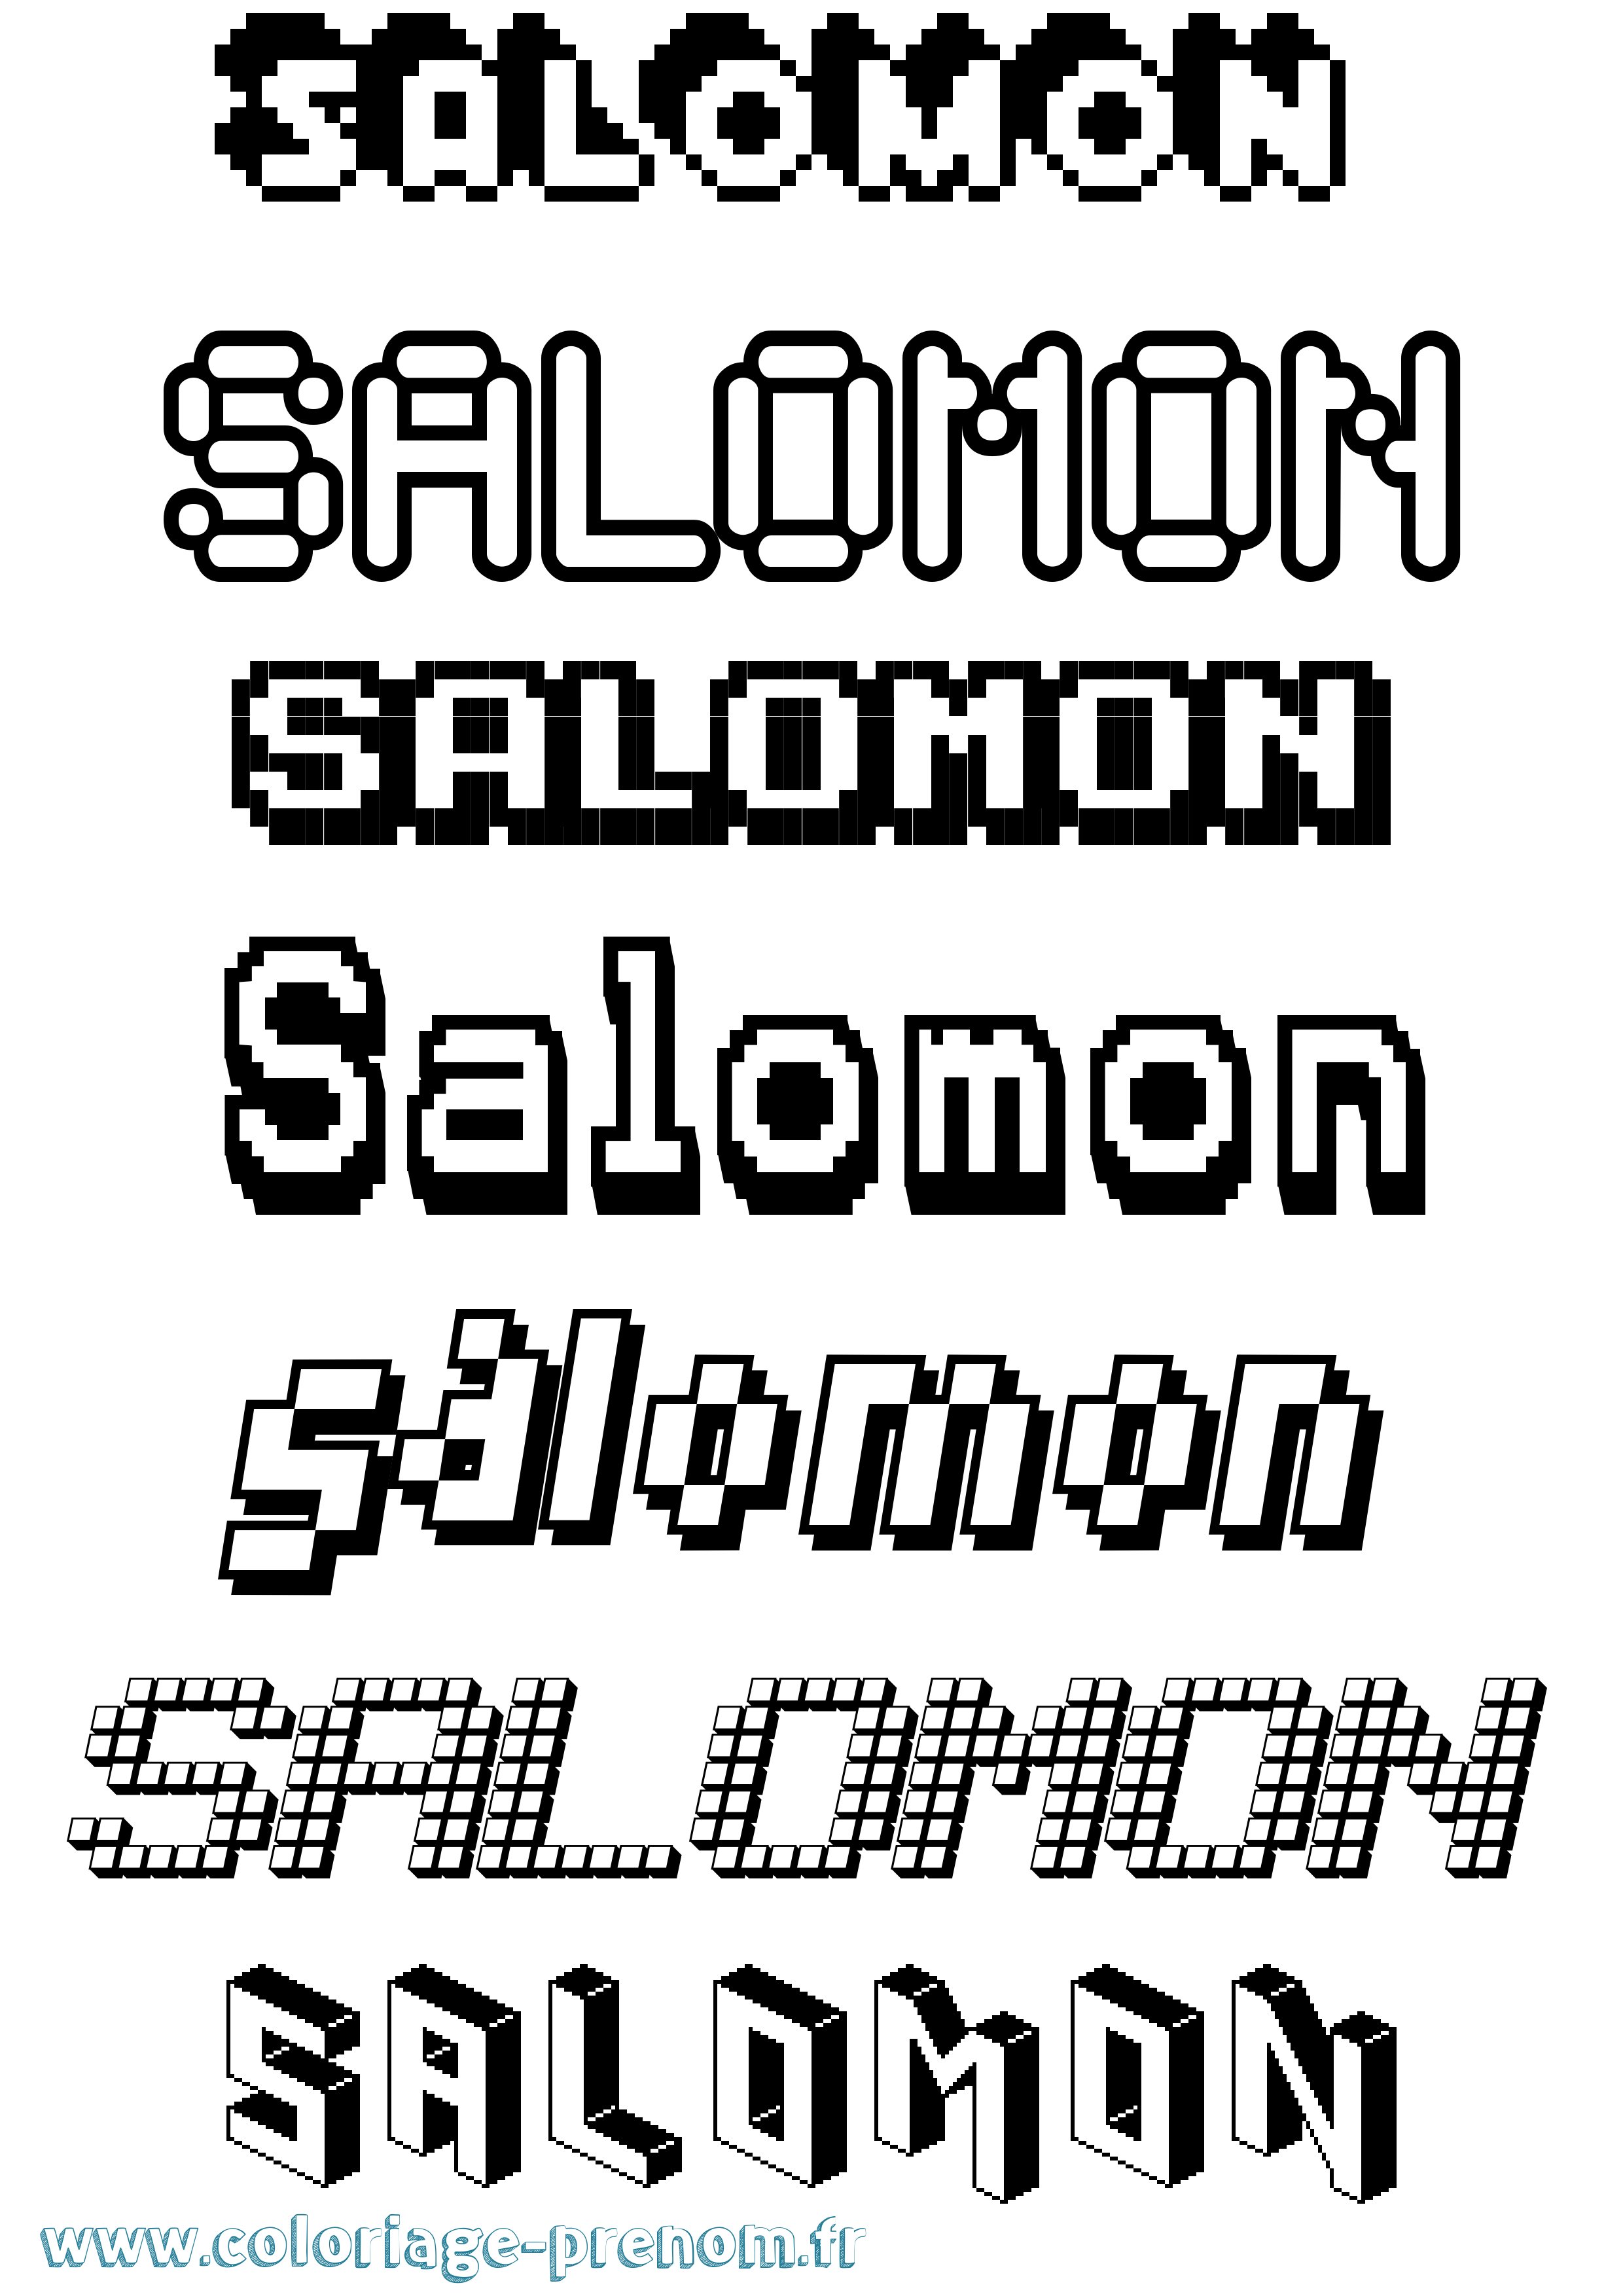 Coloriage prénom Salomon Pixel